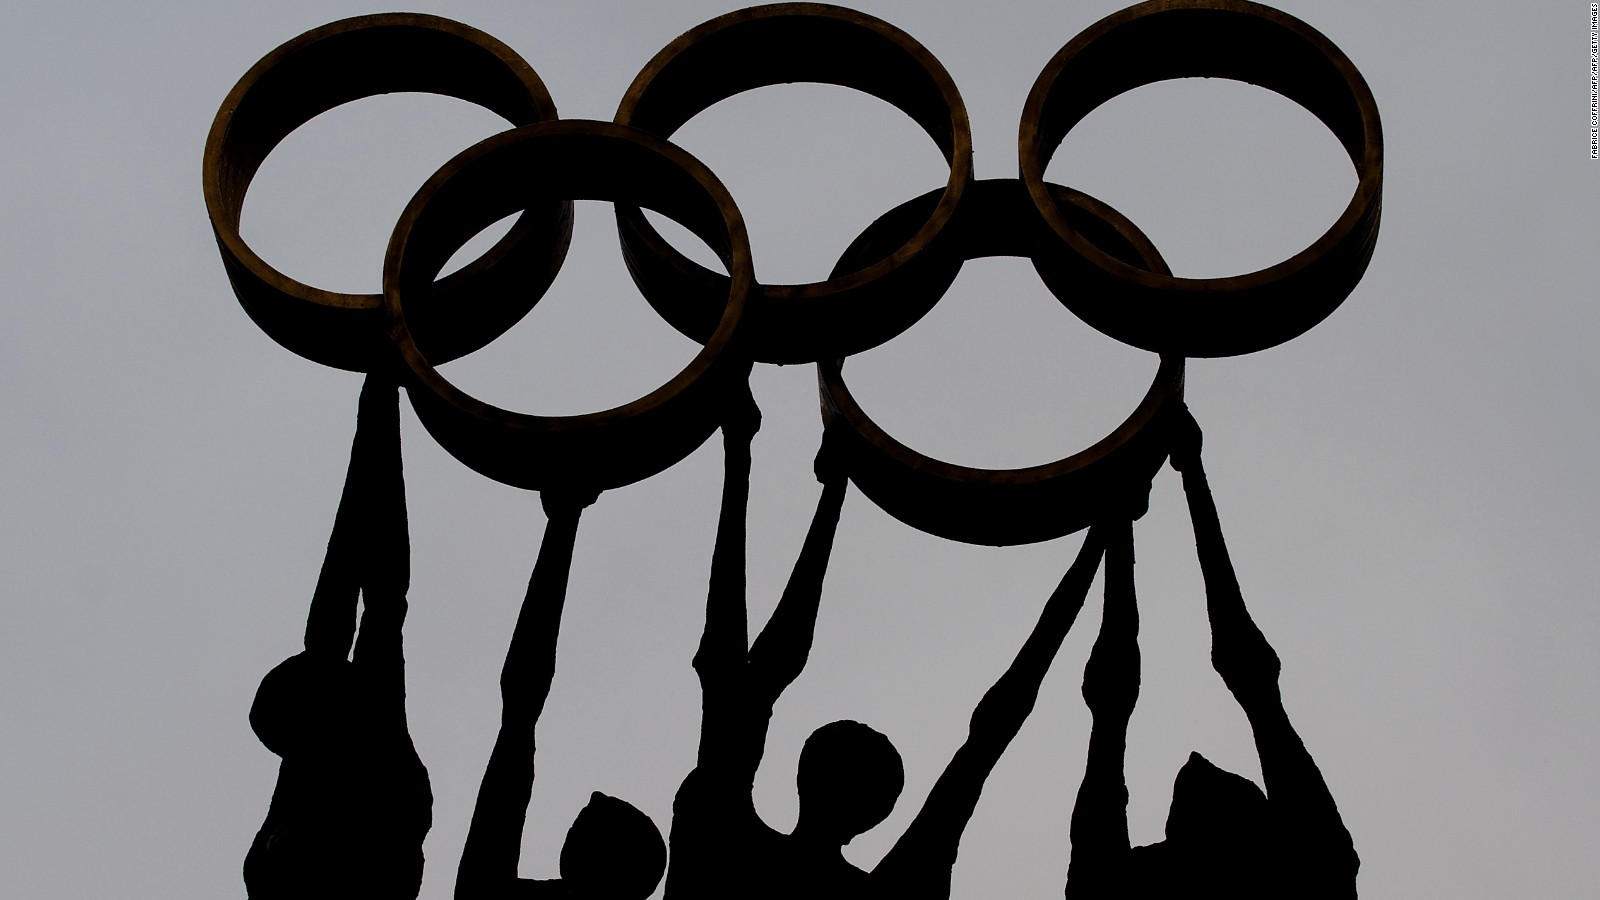 Rio 2016 Olympic body changes transgender guidelines CNN